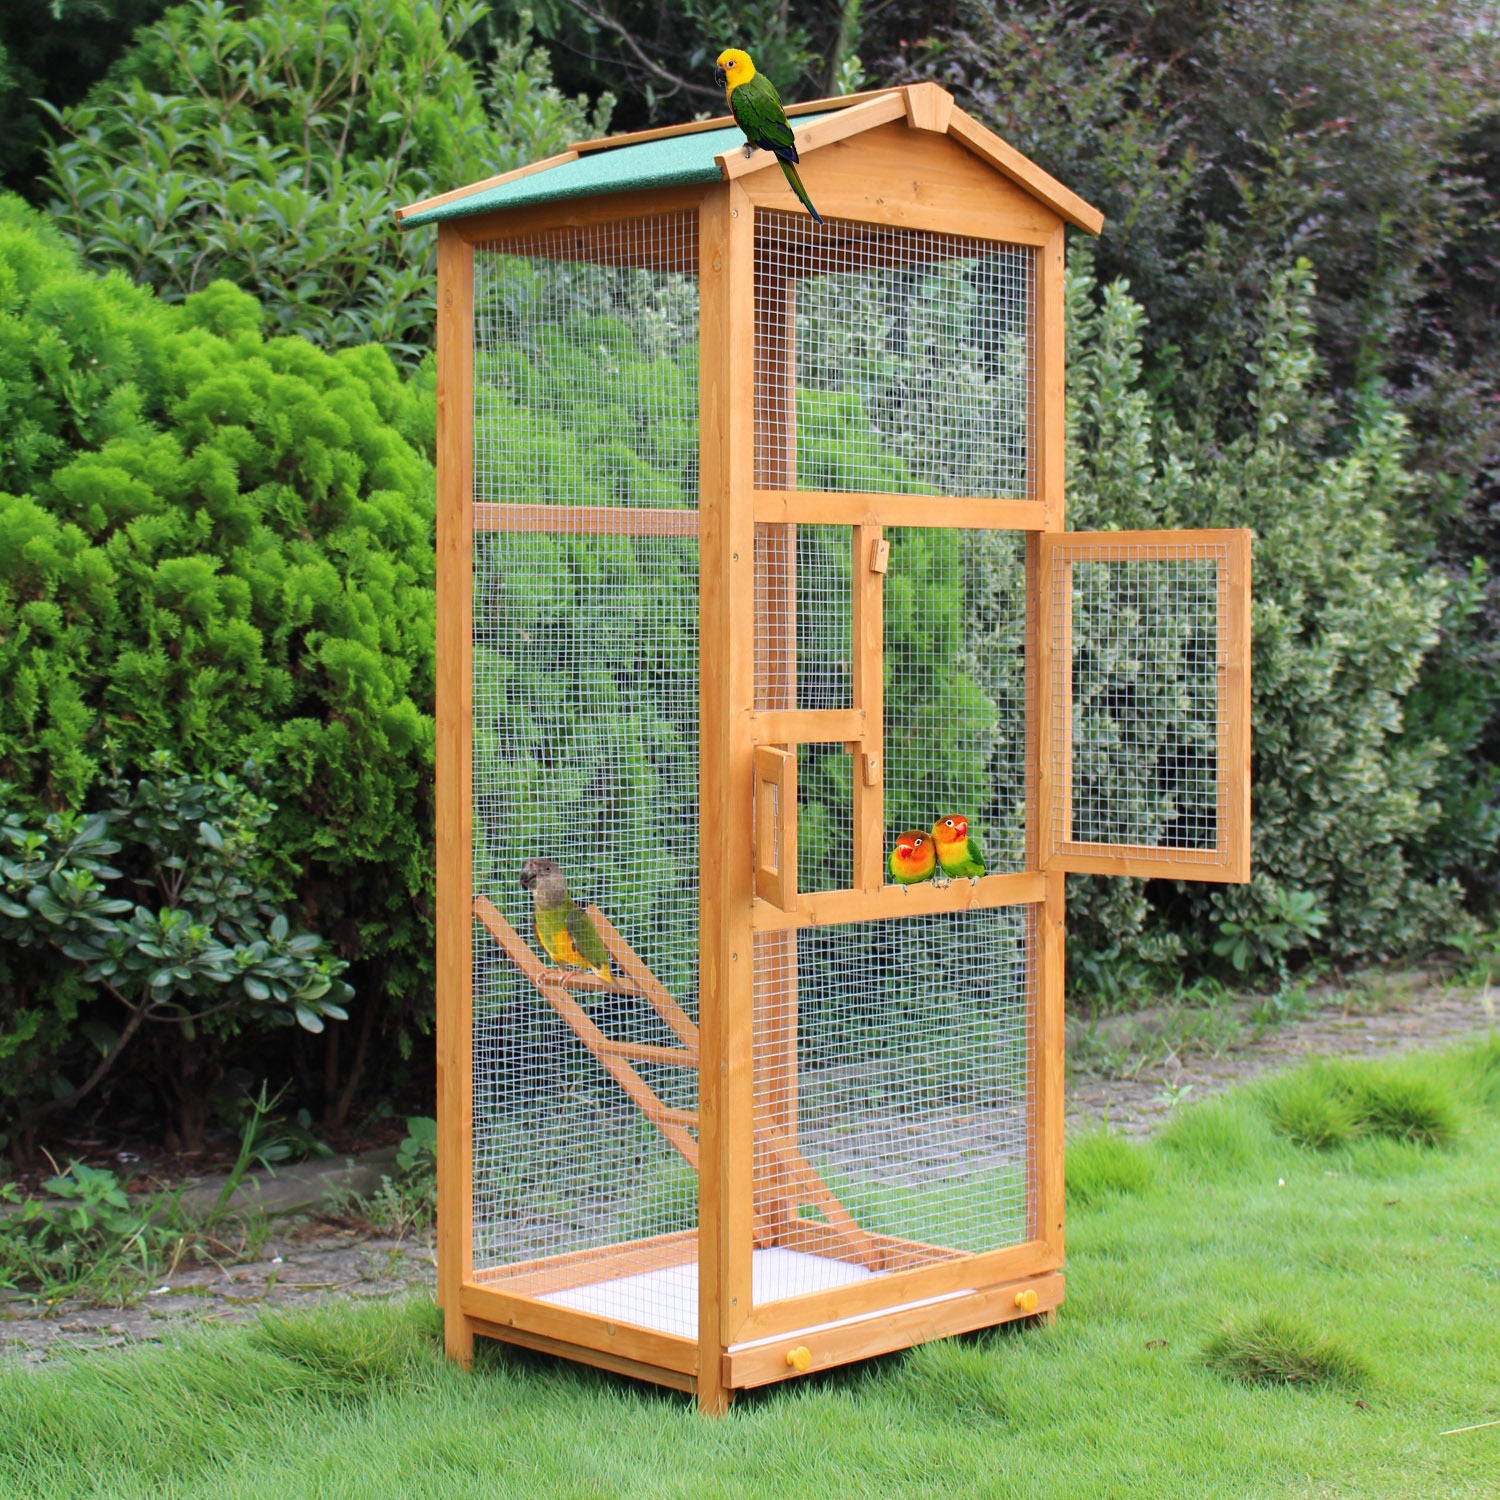 Wooden Bird Cage (68cm x 63cm x 165cm)